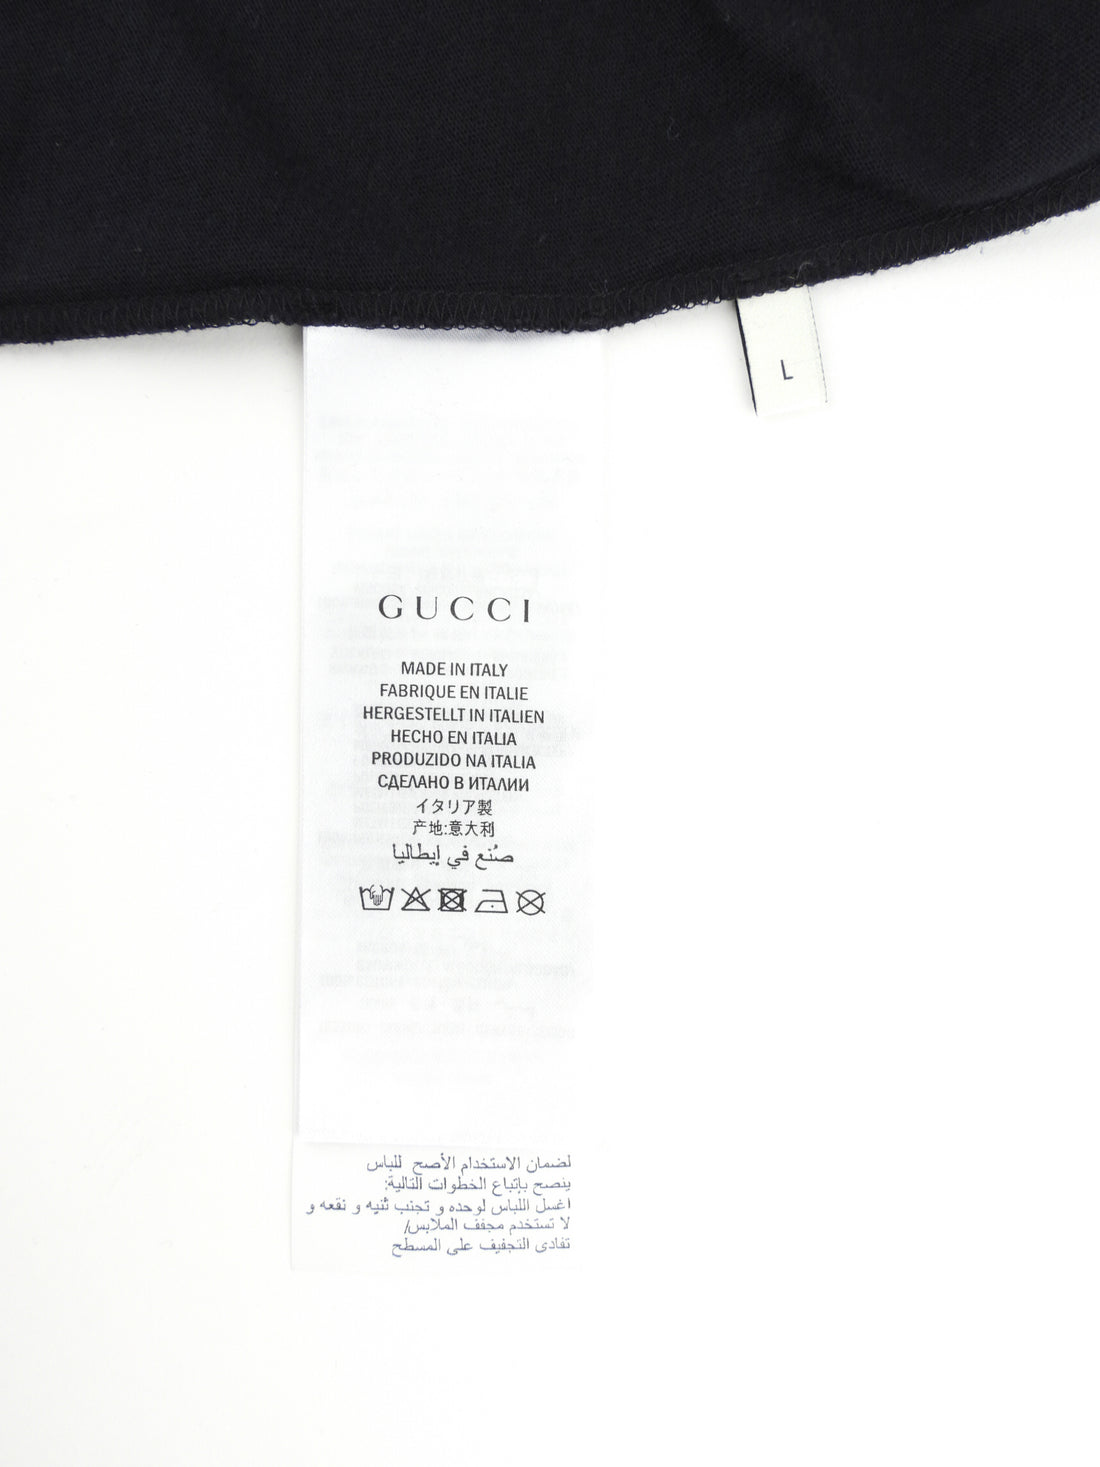 Gucci Black Cotton Gold Sequin Embellished T-Shirt Dress - L